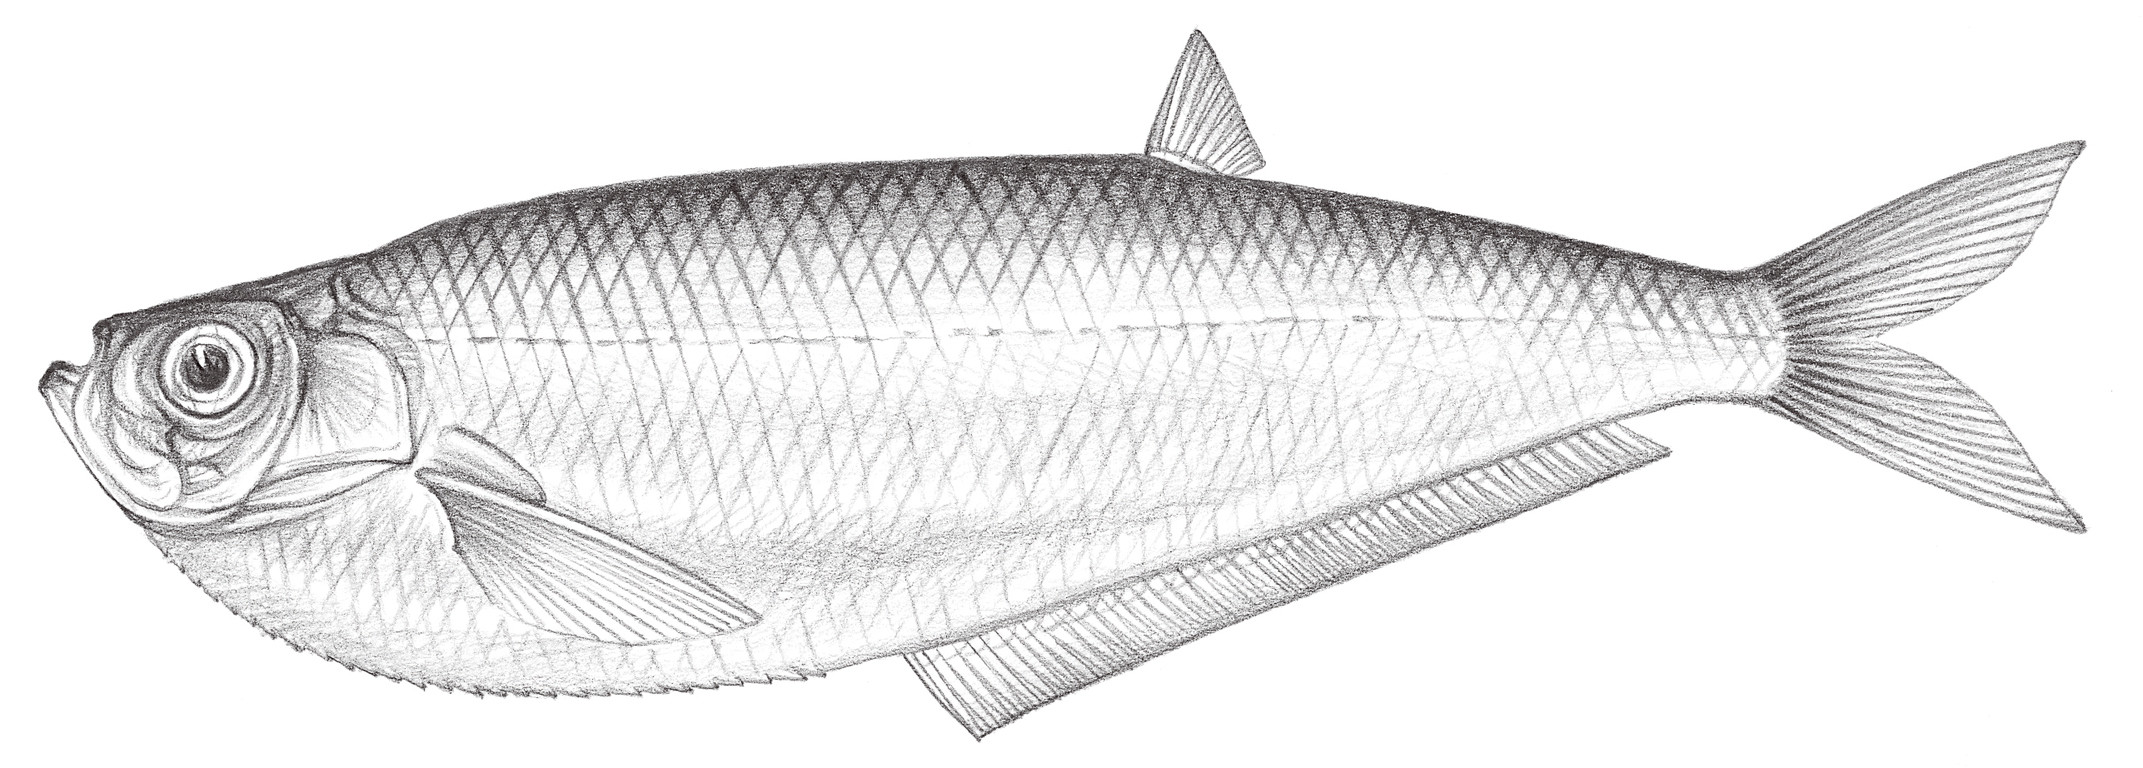 File:Largemouth bass fish underwater animal in natural habitat ...